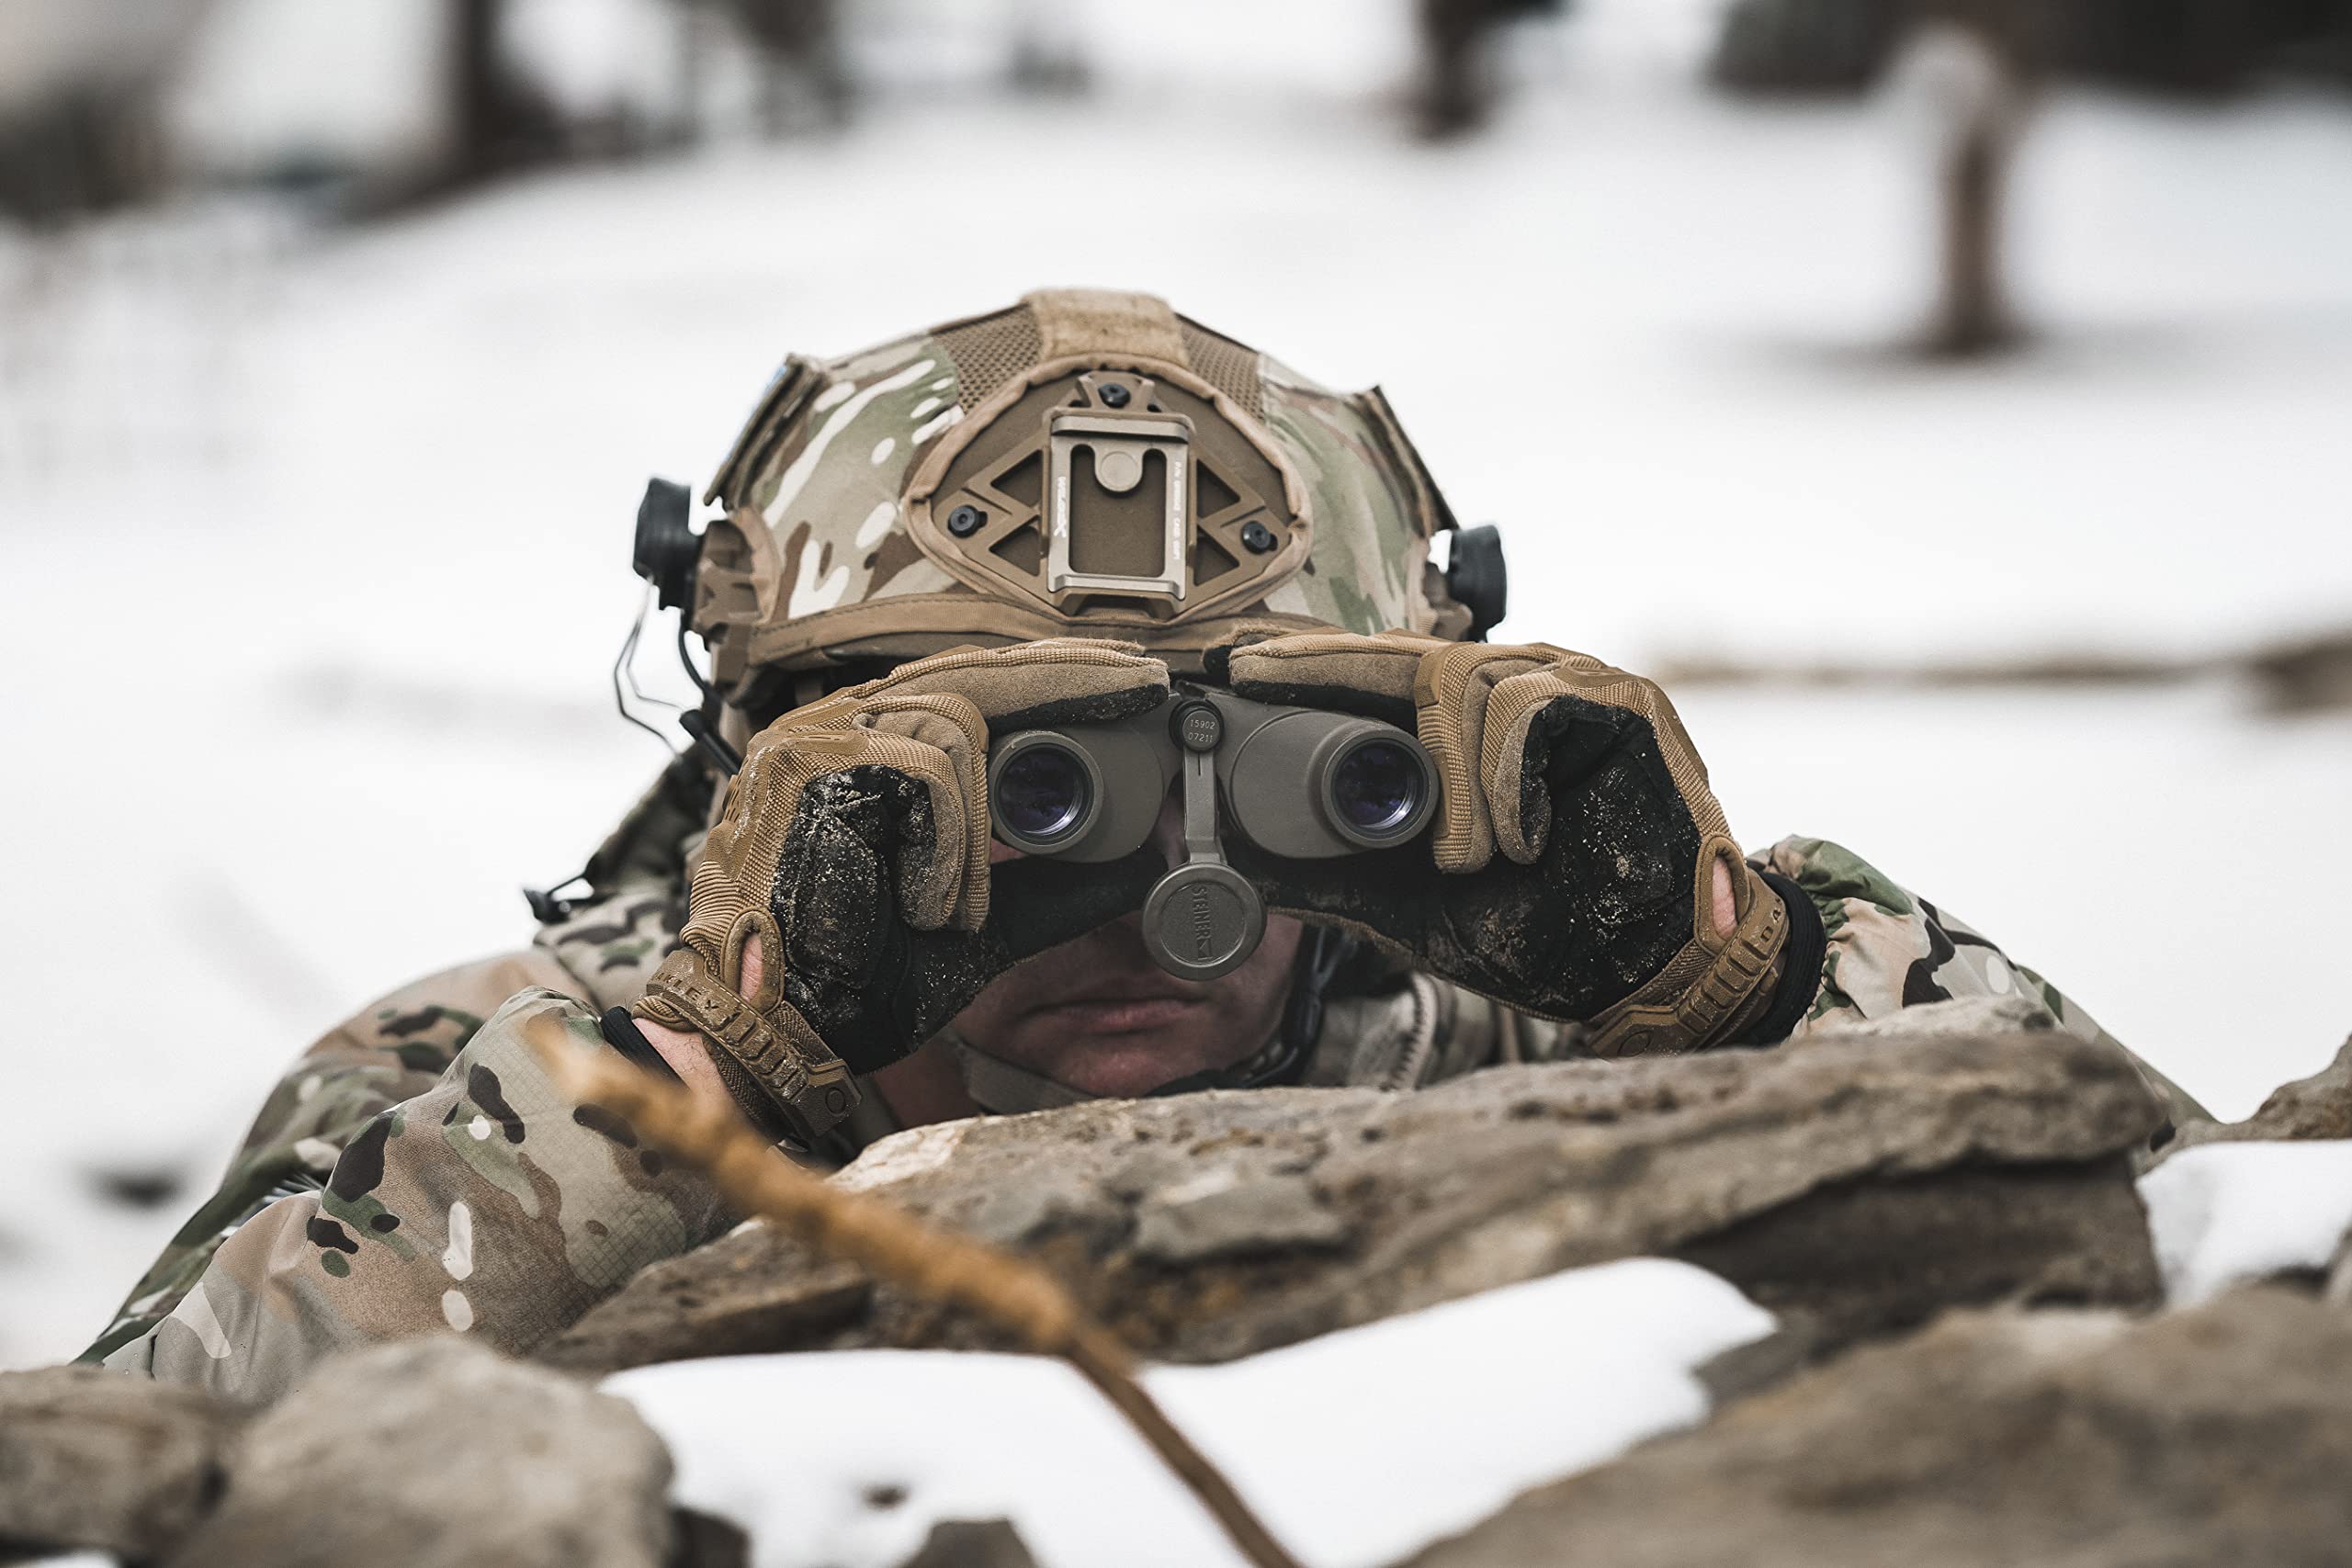 Steiner Military-Marine Series Binoculars, Lightweight Tactical Precision Optics for Any Situation, Waterproof, Green, 7x50